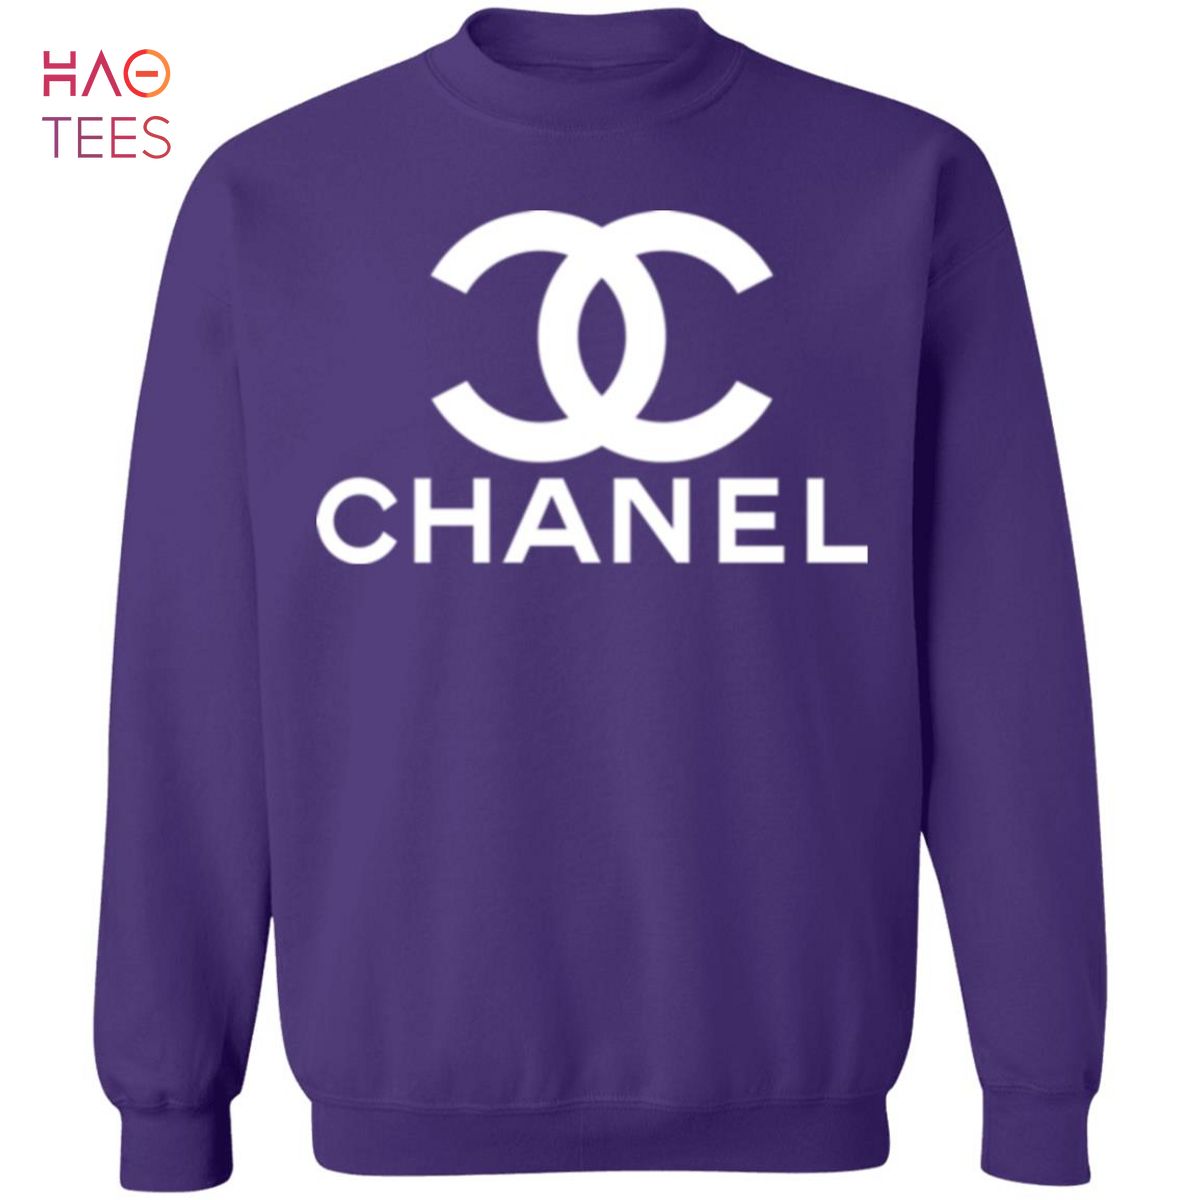 HOT Chanel Sweater Dark